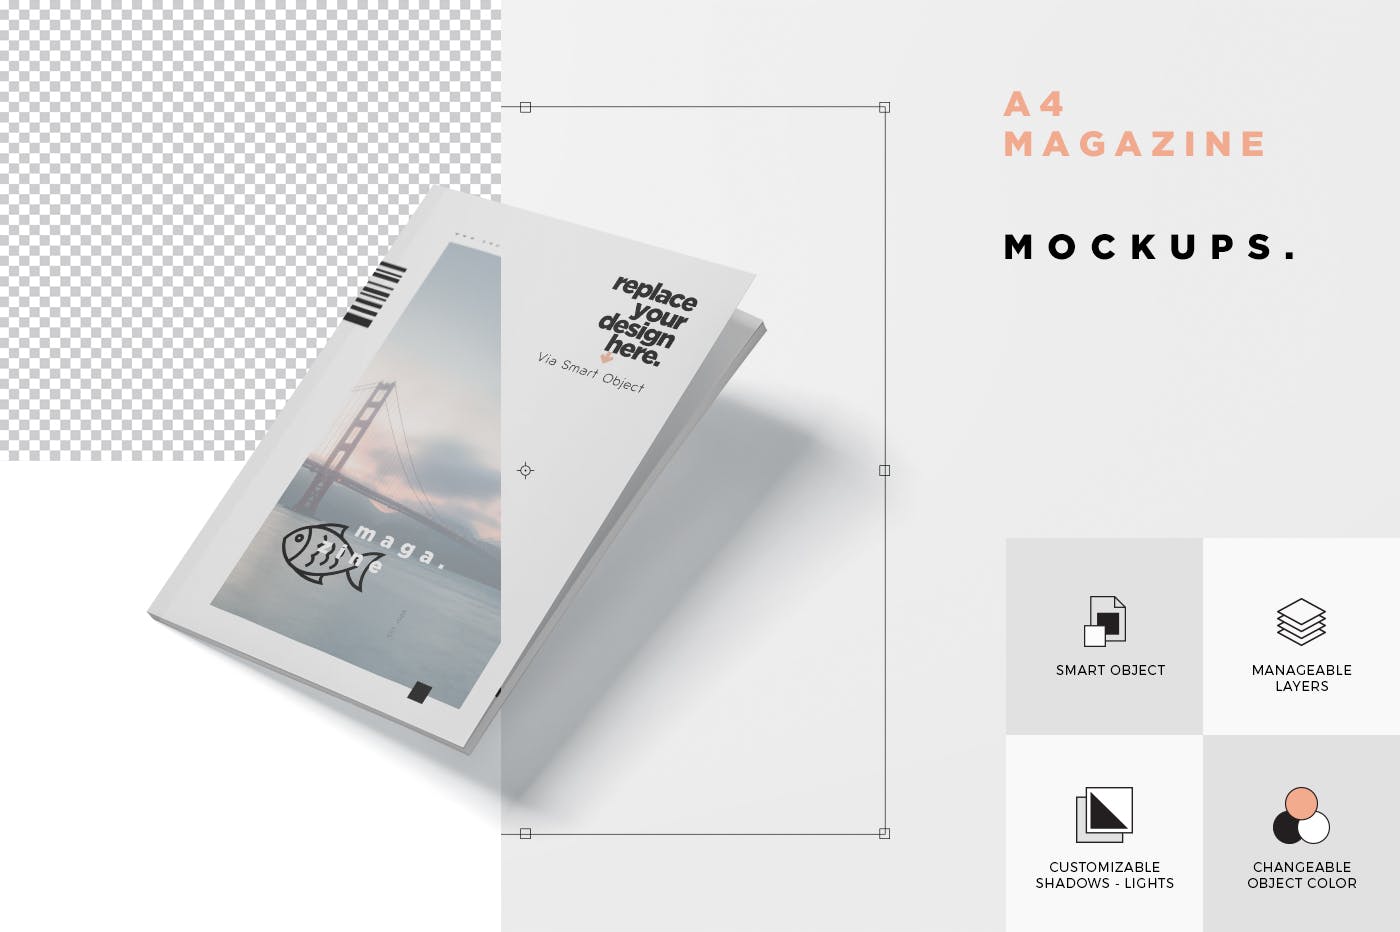 A4尺寸大小杂志封面&内页版式设计图样机第一素材精选 Magazine Mockup – A4 210×297 mm Size插图(6)